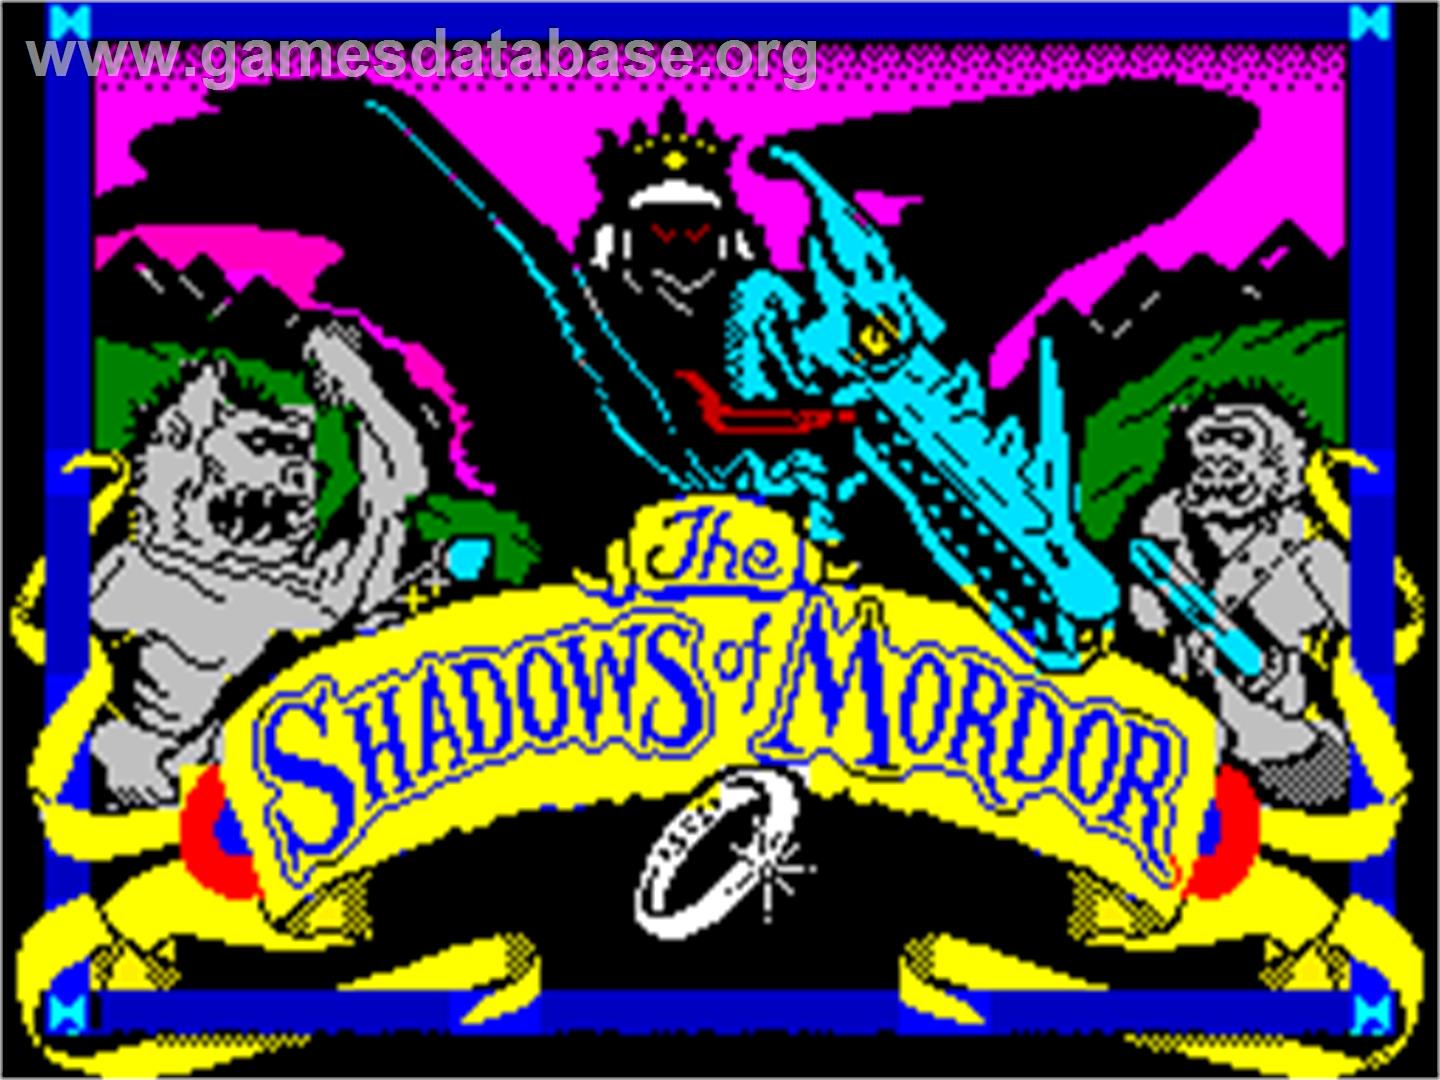 The Shadows of Mordor - Sinclair ZX Spectrum - Artwork - Title Screen